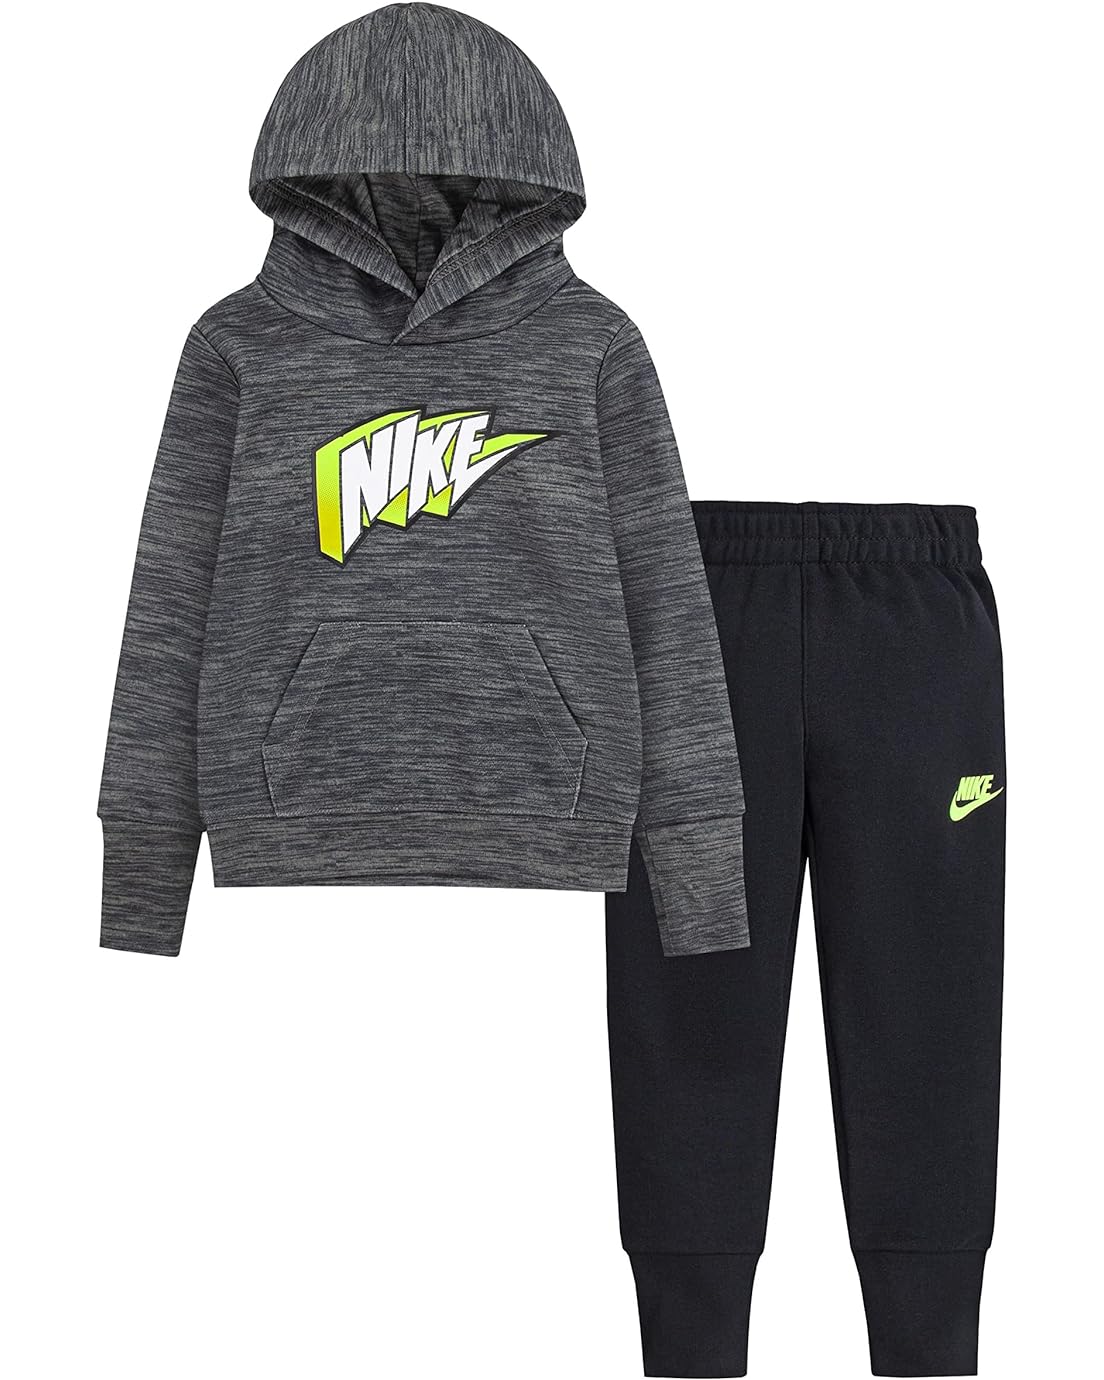 Nike Kids Go For Gold Pullover Pants Set (Toddler)